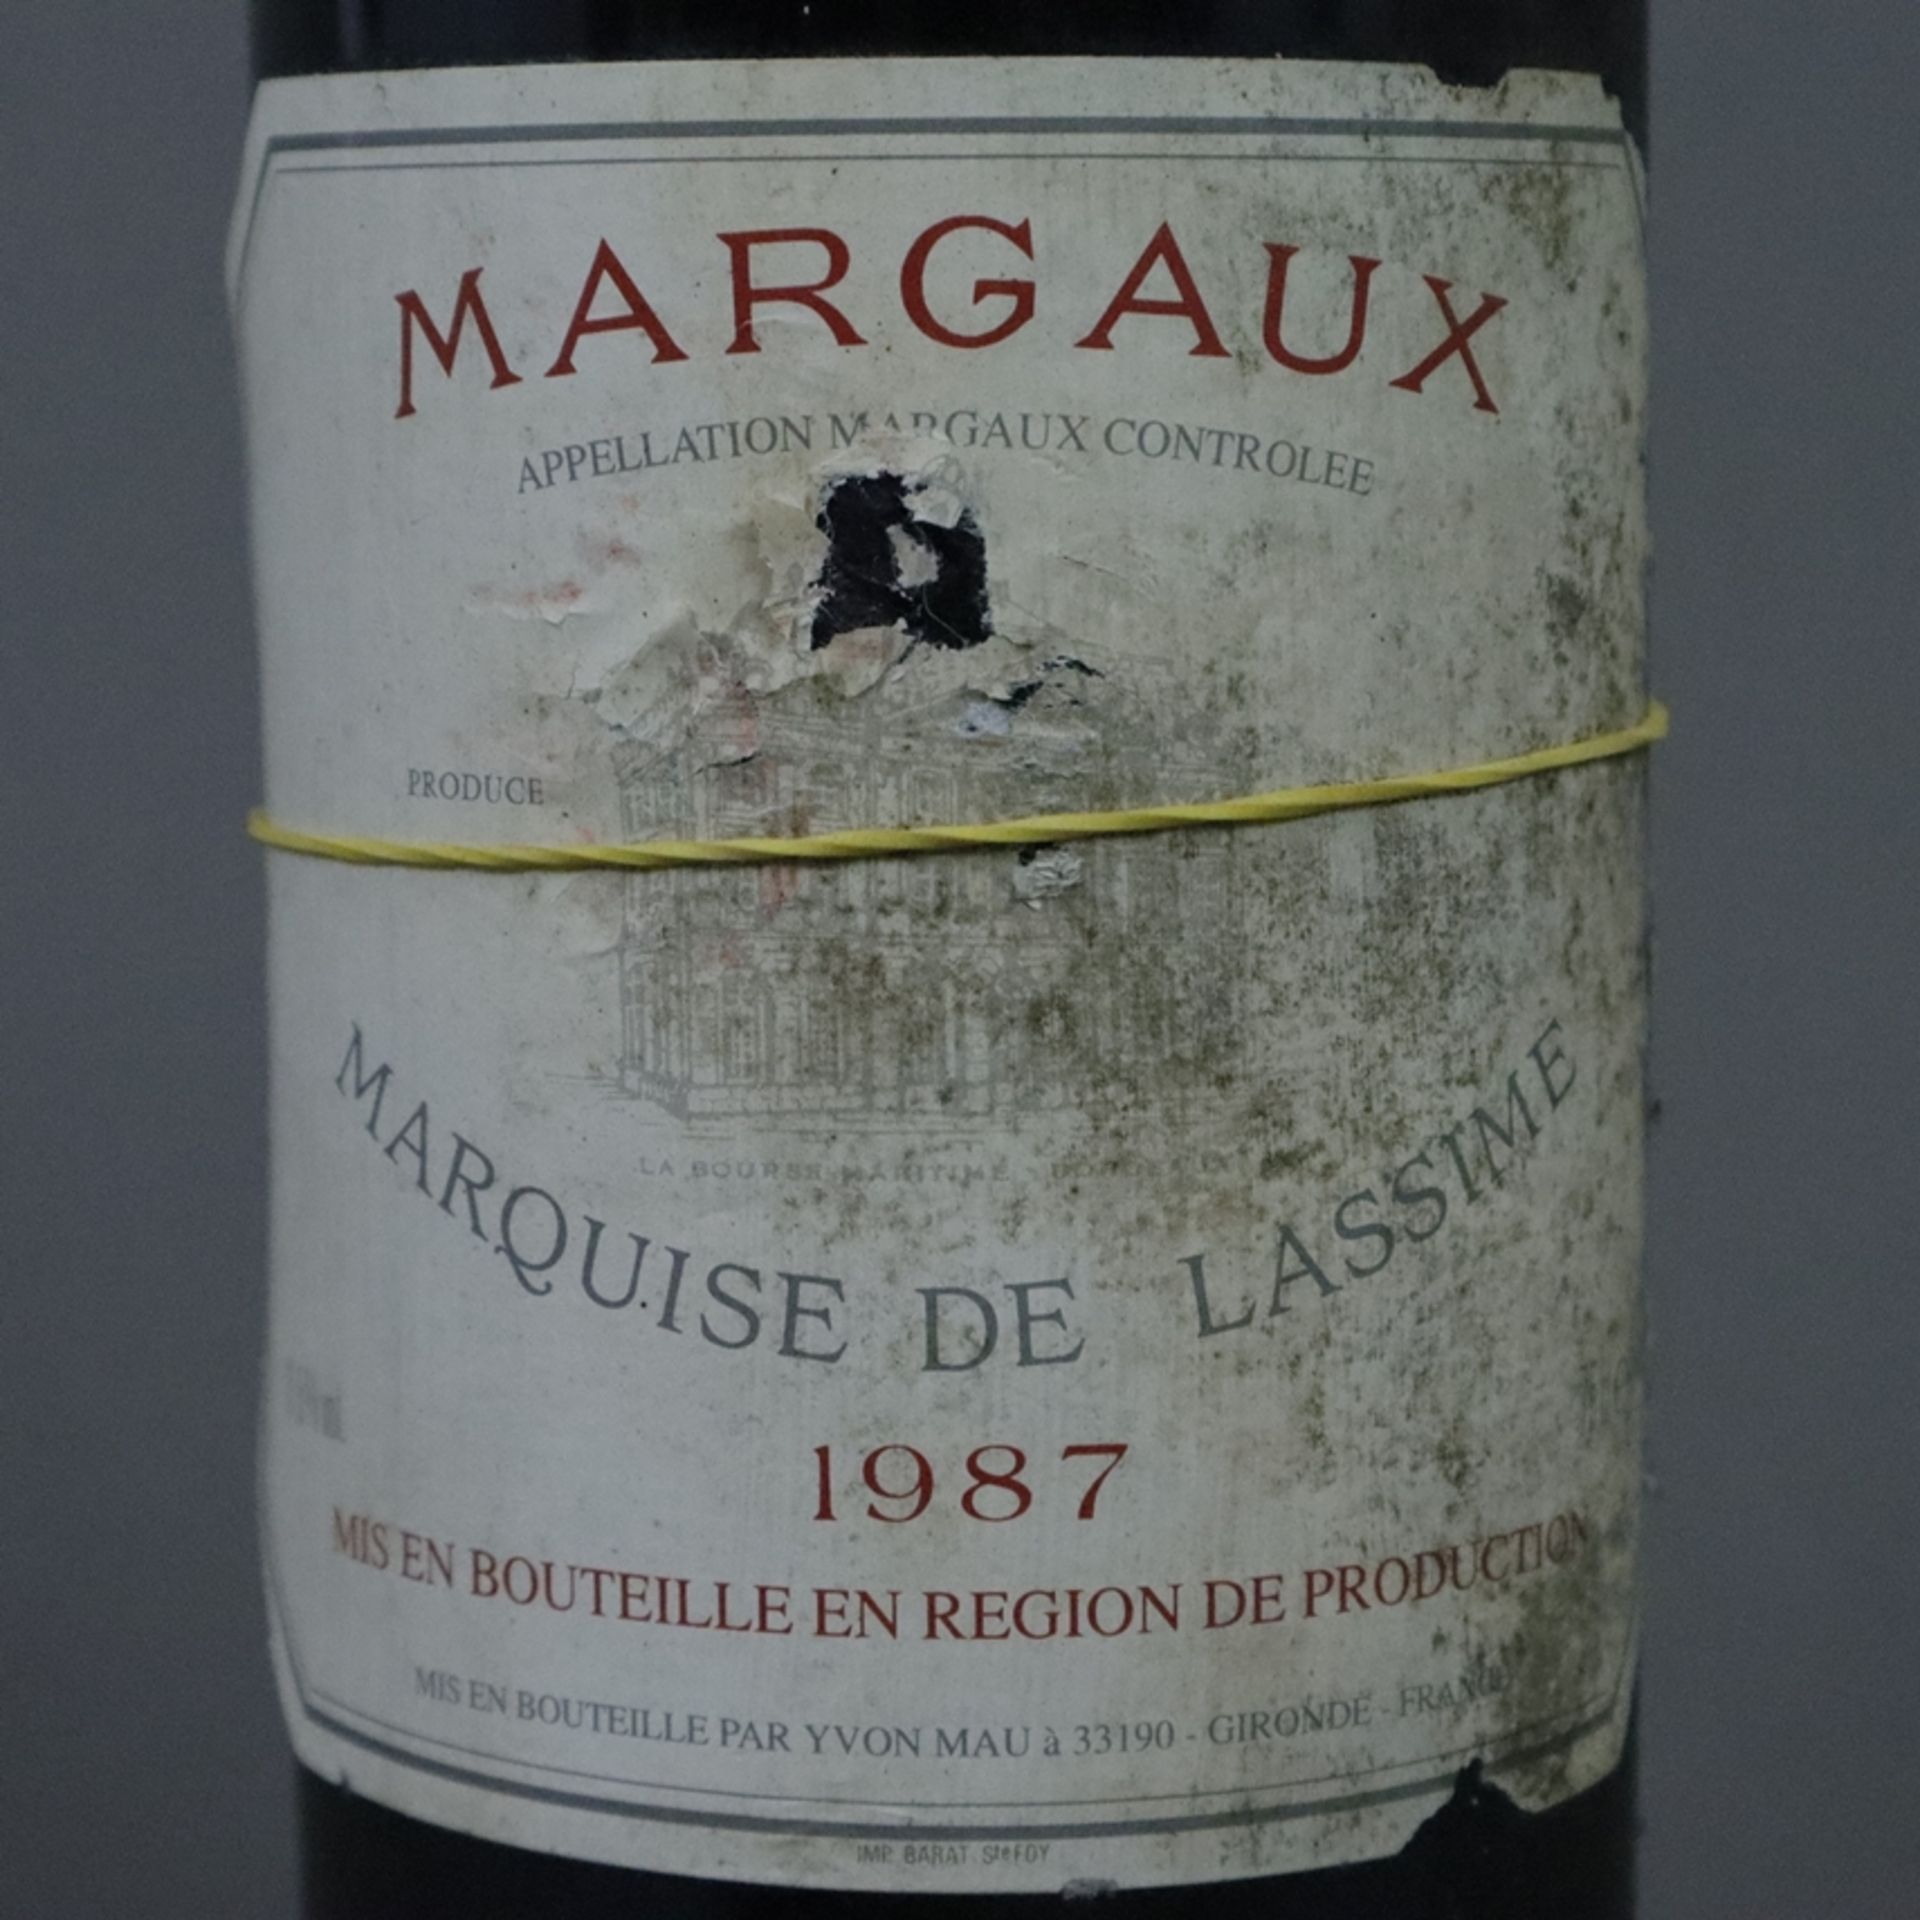 Weinkonvolut - 3 Flaschen 1987 Margaux, Marquise de Lassime, France, 75 cl, Füllstand: Top Shoulder - Image 4 of 7